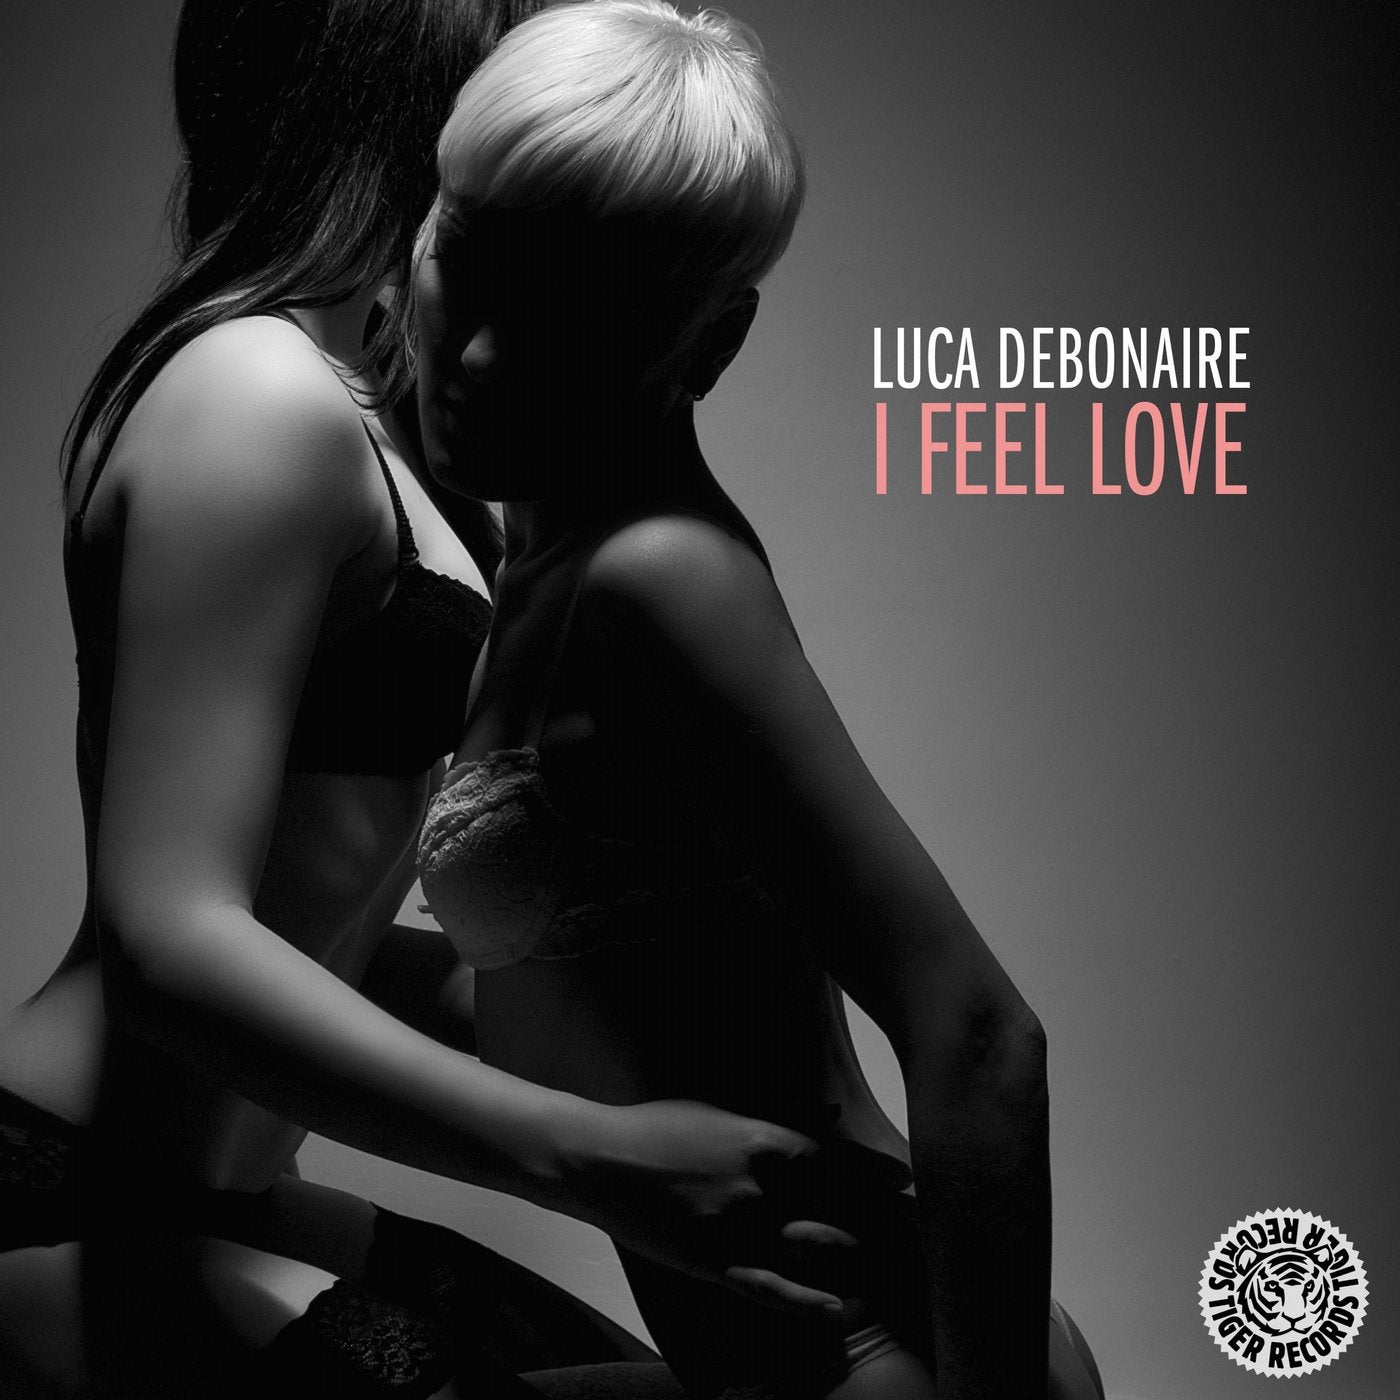 Ай фил лов. Luca Debonaire фото. Feel Love. Feel Love трек.